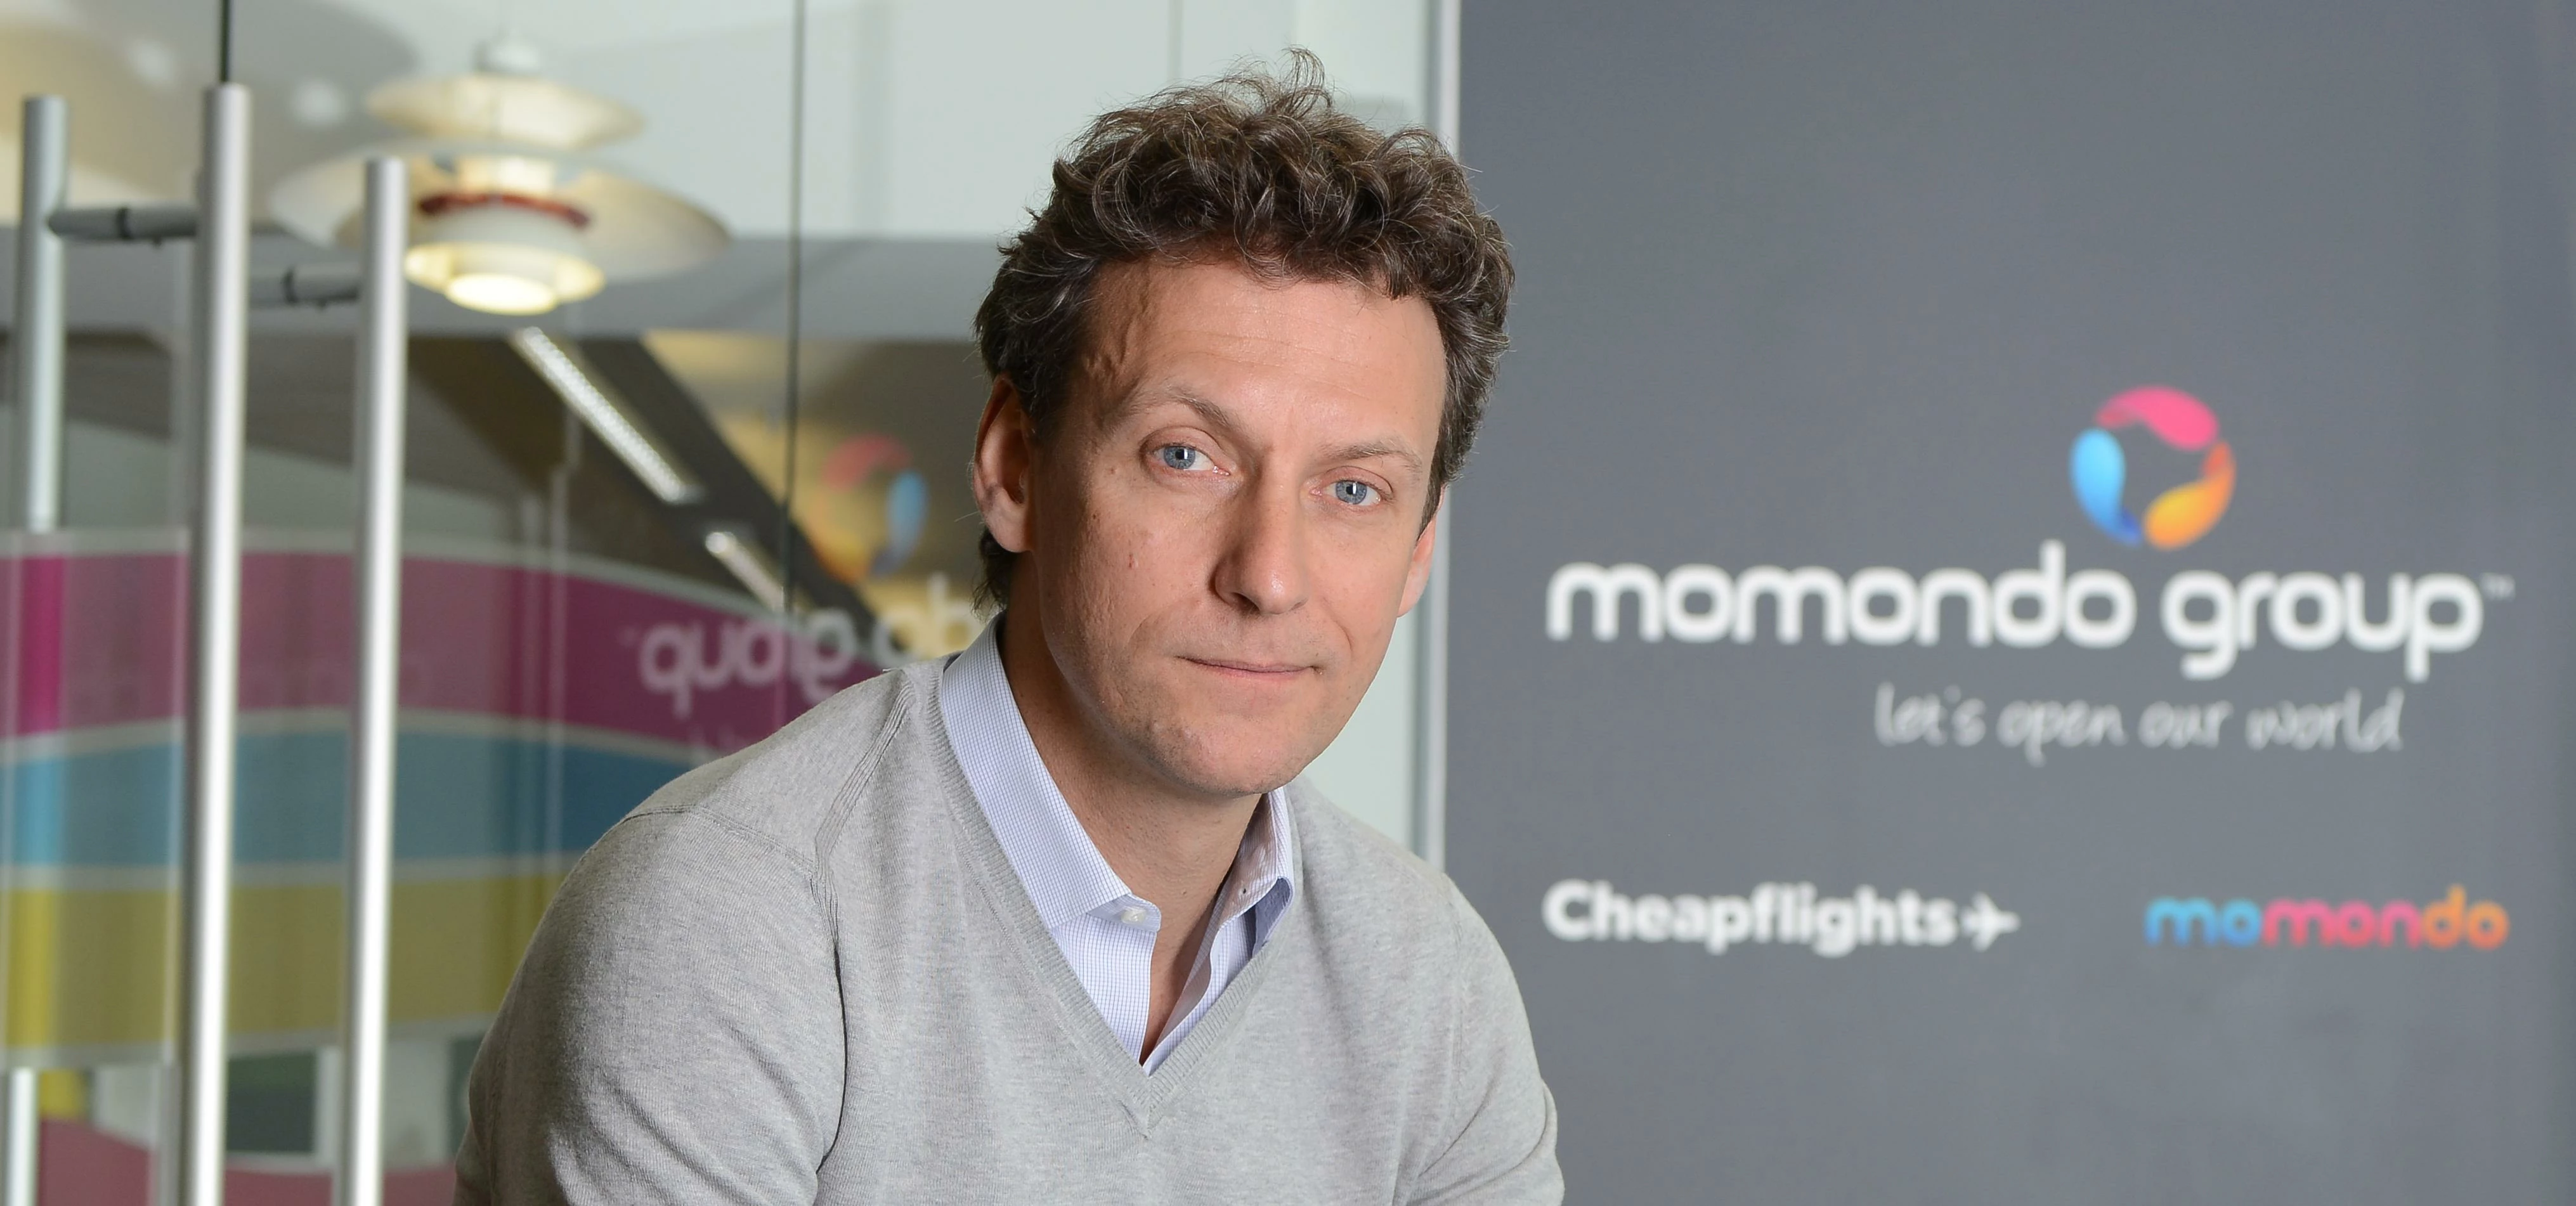 Hugo Burge, Chief Executive Officer at Momondo Group.